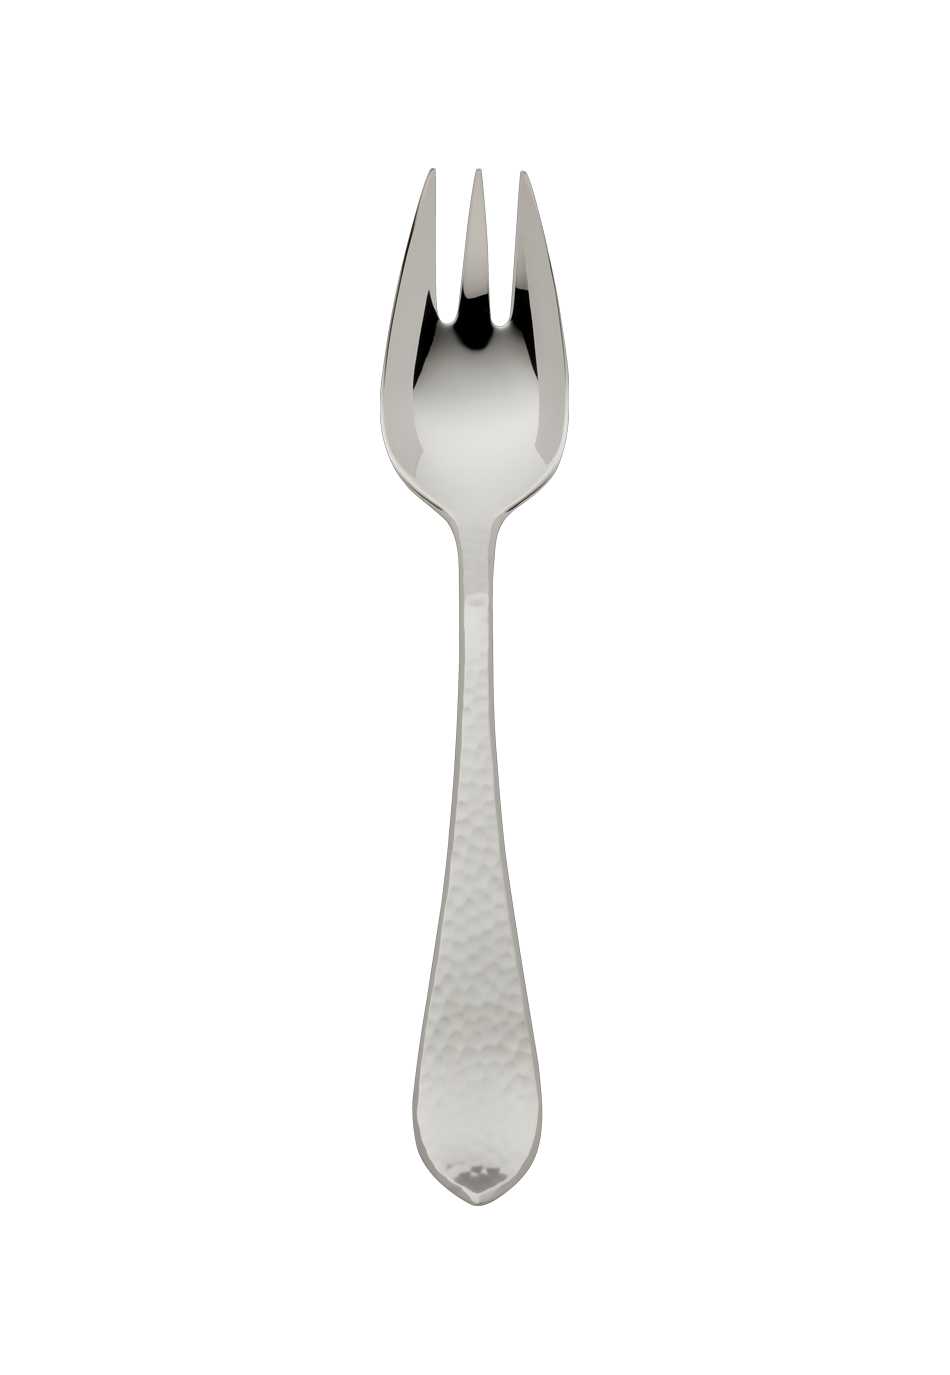 Martelé Vegetable Fork (150g massive silverplated)